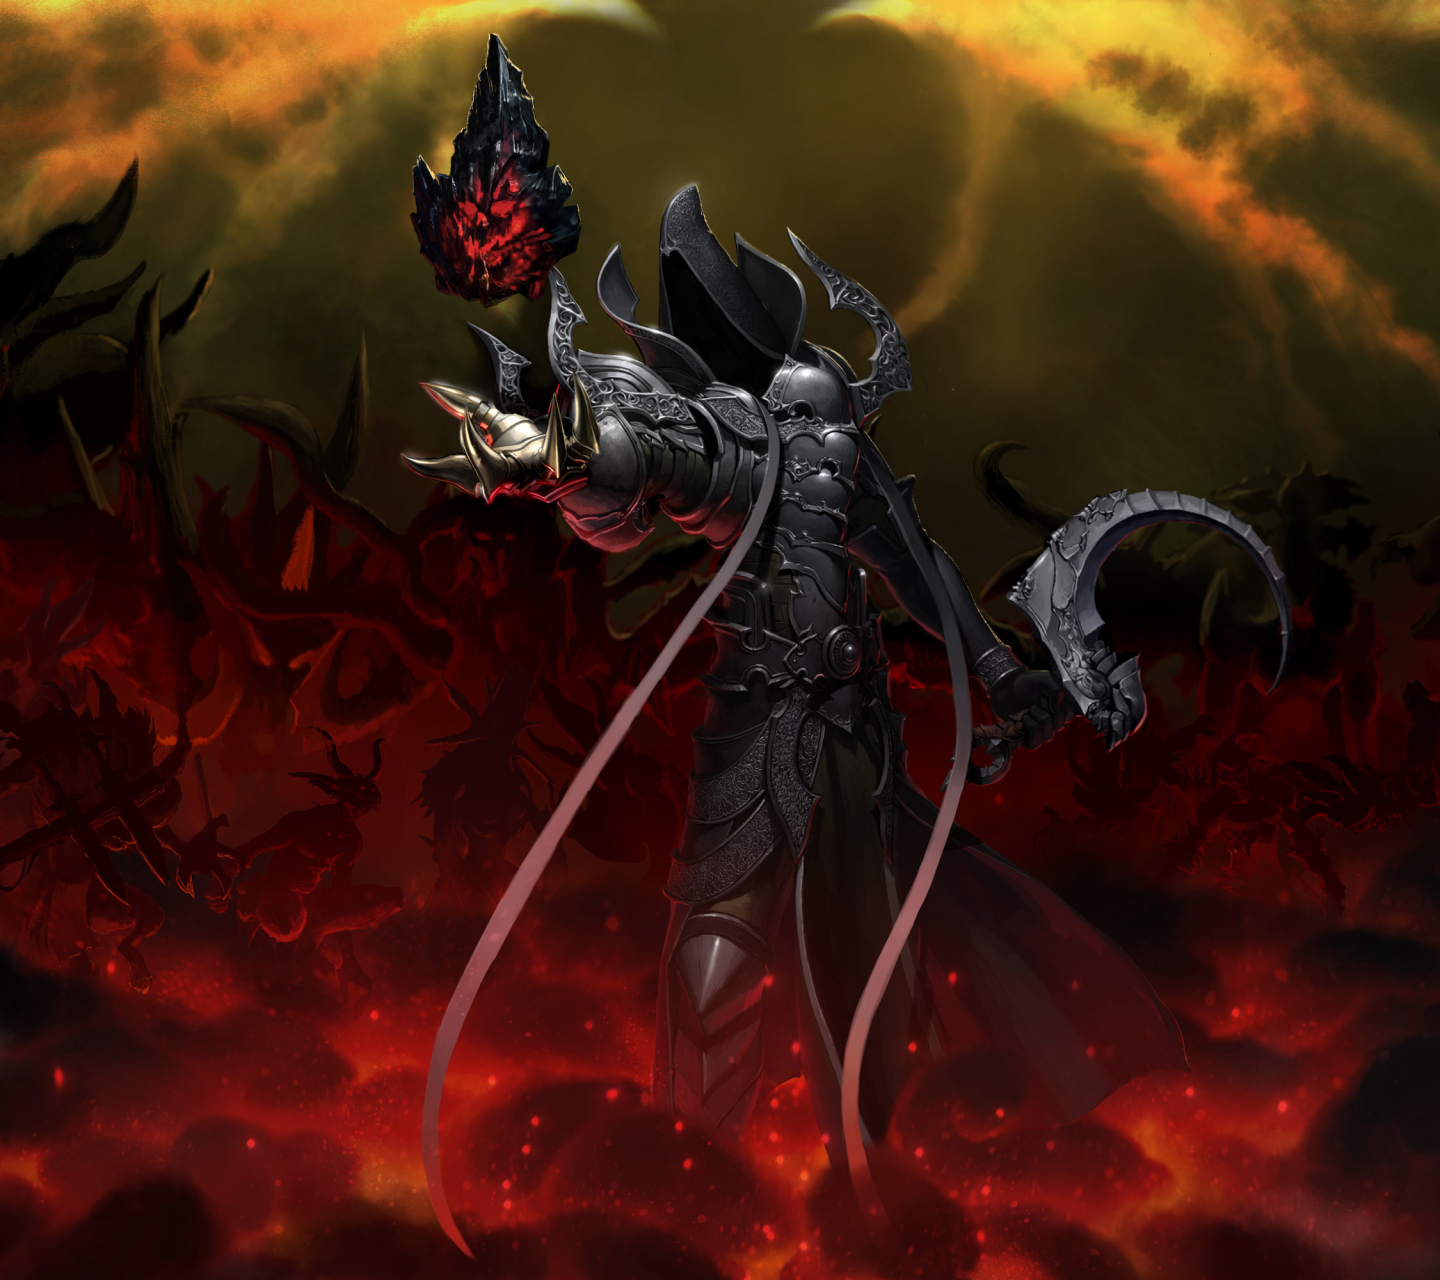 Baixe gratuitamente a imagem Diablo, Videogame, Maltael (Diablo Iii), Diablo Iii: Reaper Of Souls na área de trabalho do seu PC